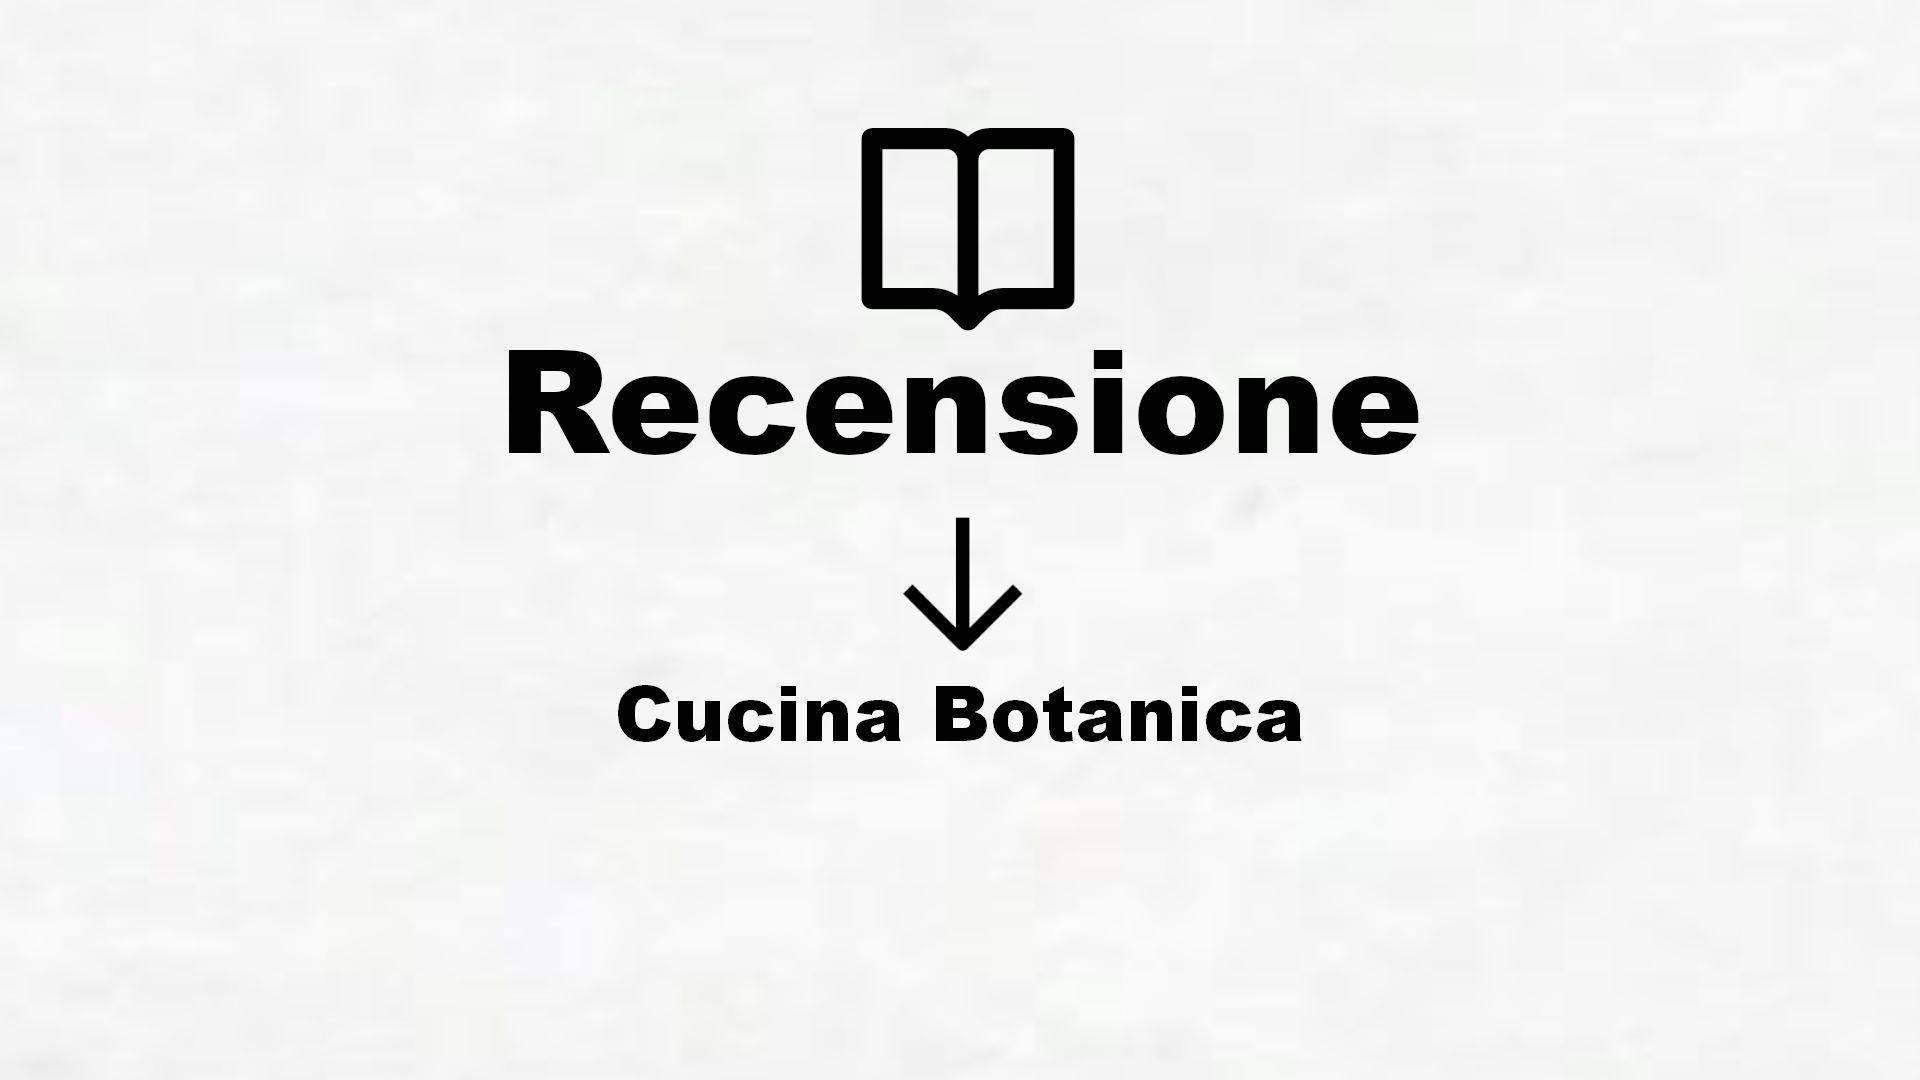 Cucina Botanica – Recensione Libro